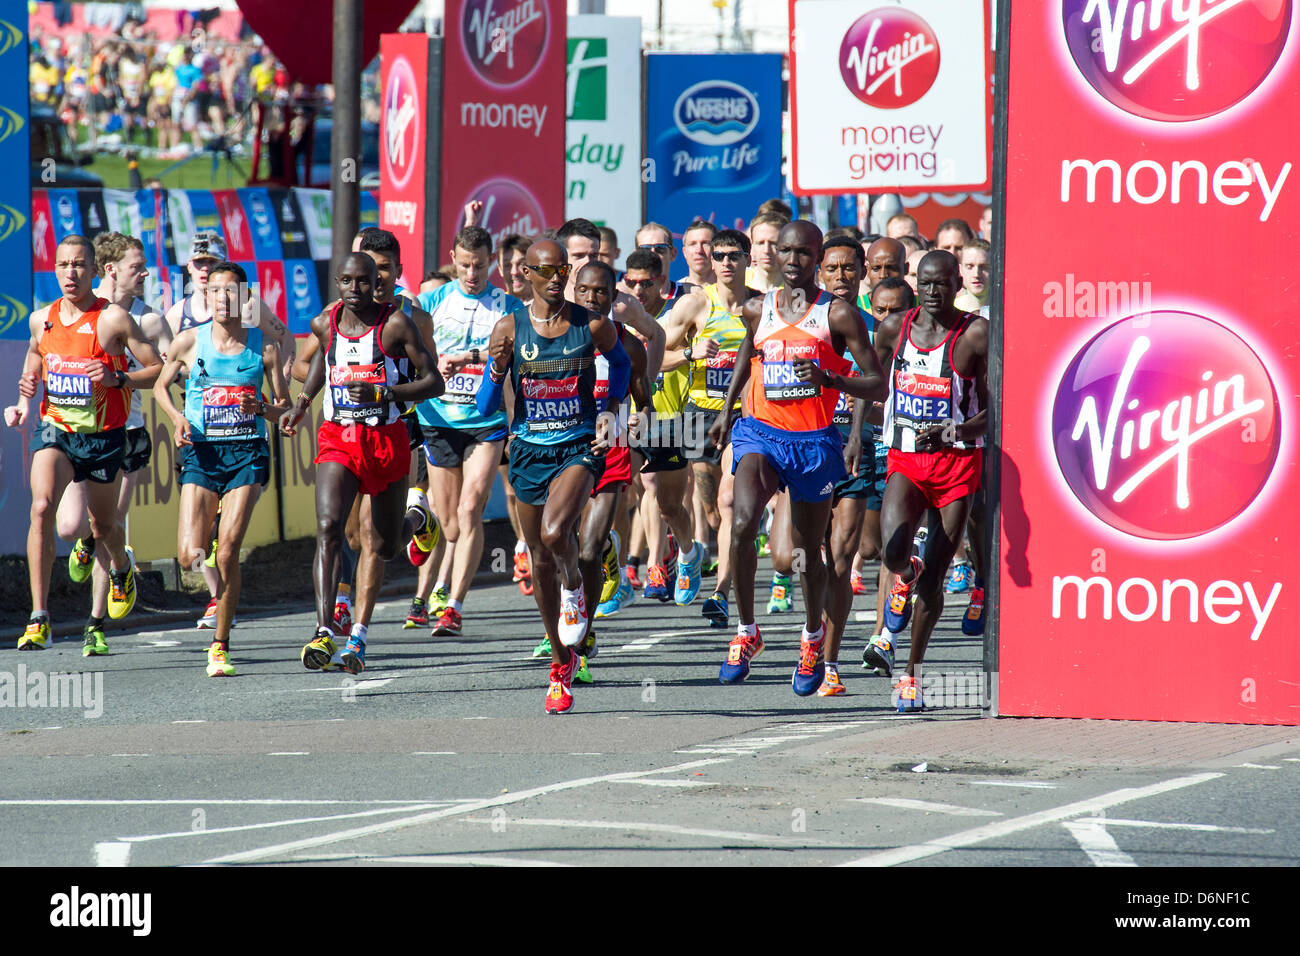 London, UK. 21. April 2013. Mo Farah beginnt der Virgin London-Marathon von Greenwich, The Mall über Canary Wharf. Stockfoto